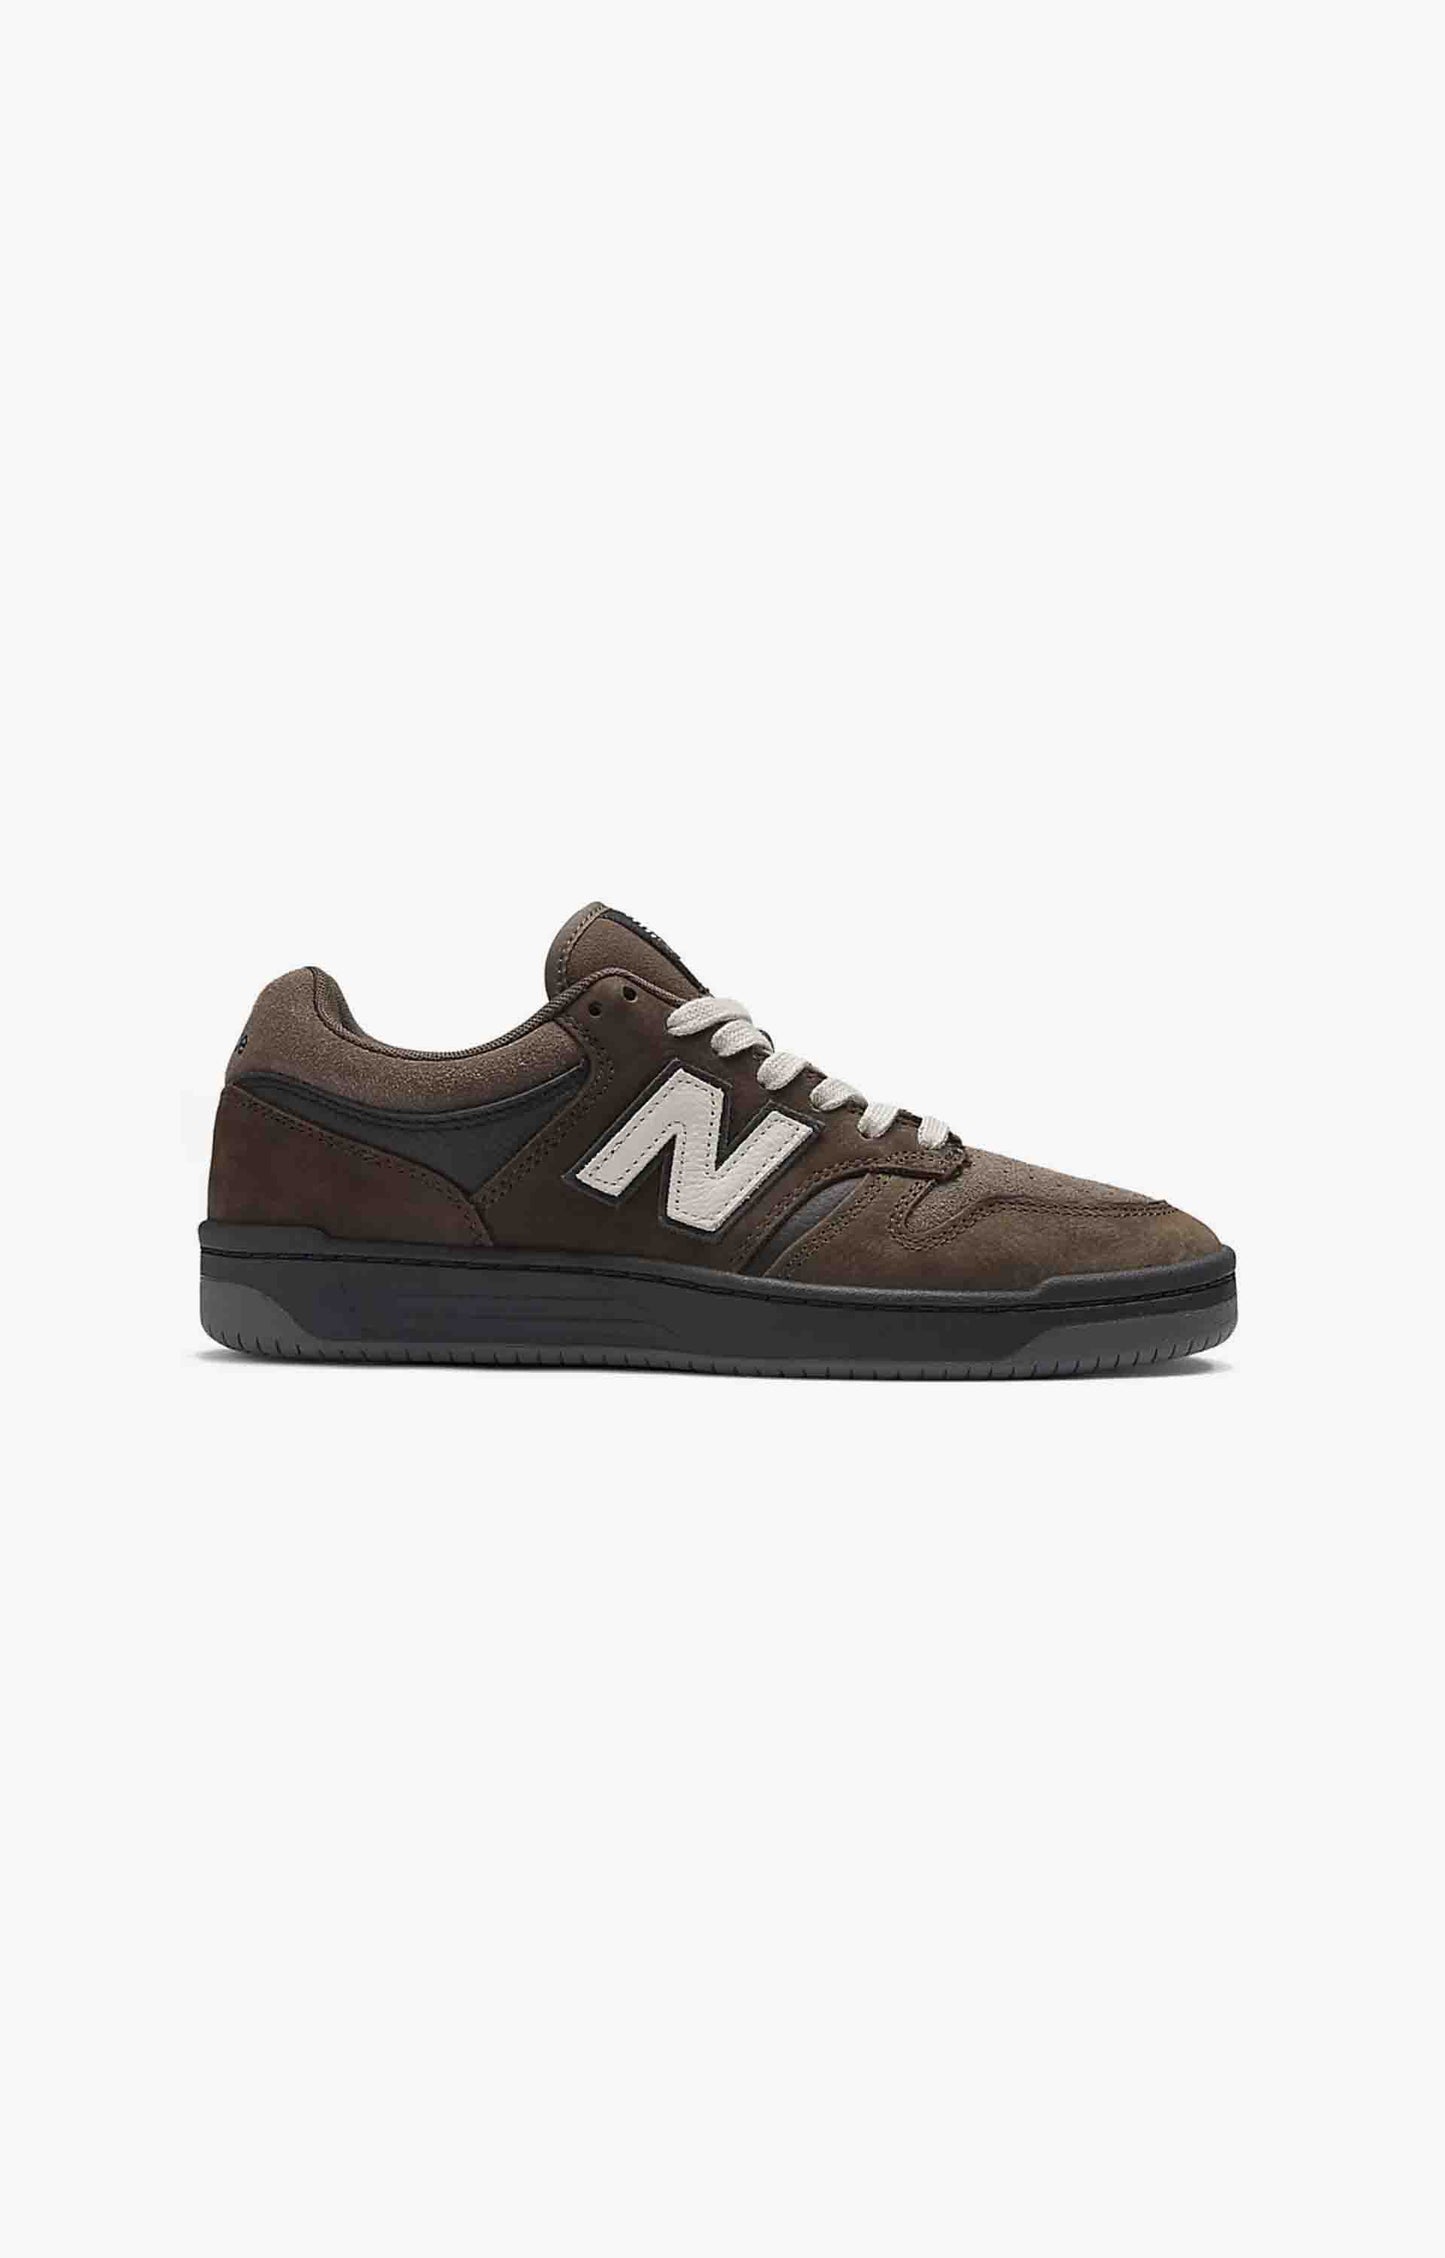 New Balance Numeric NM480BOS Shoe, Chocolate/Tan